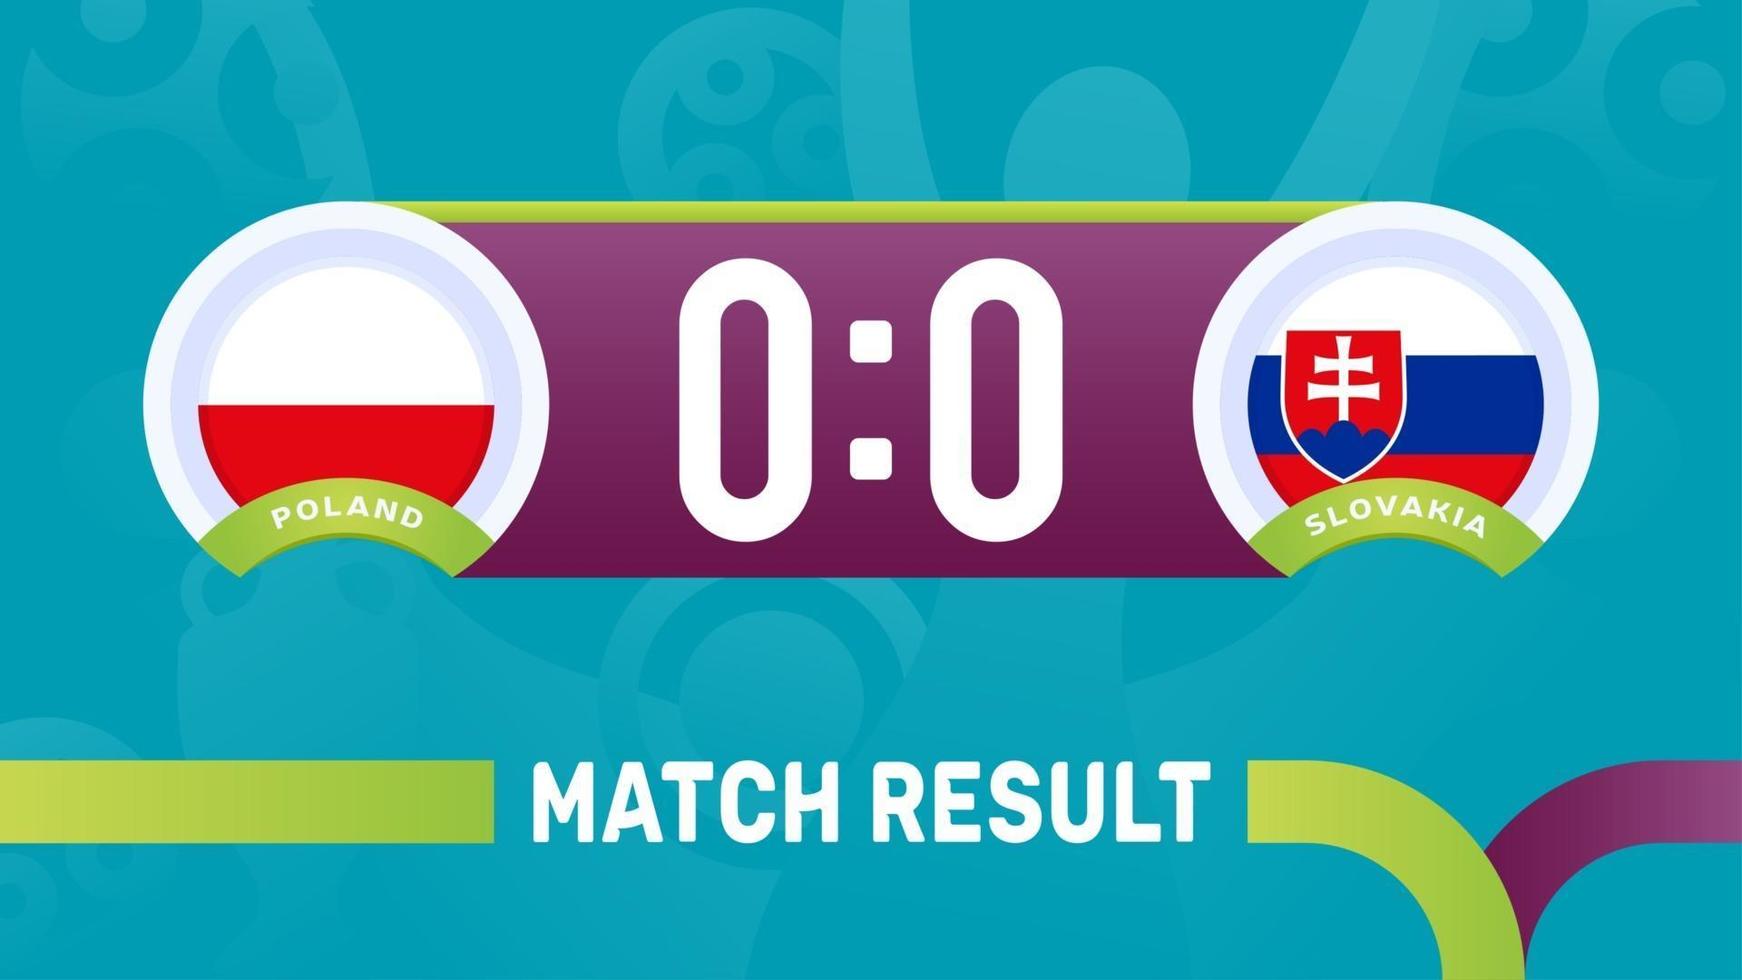 poland slovakia match result, European Football Championship 2020 vector illustration. Football 2020 championship match versus teams intro sport background